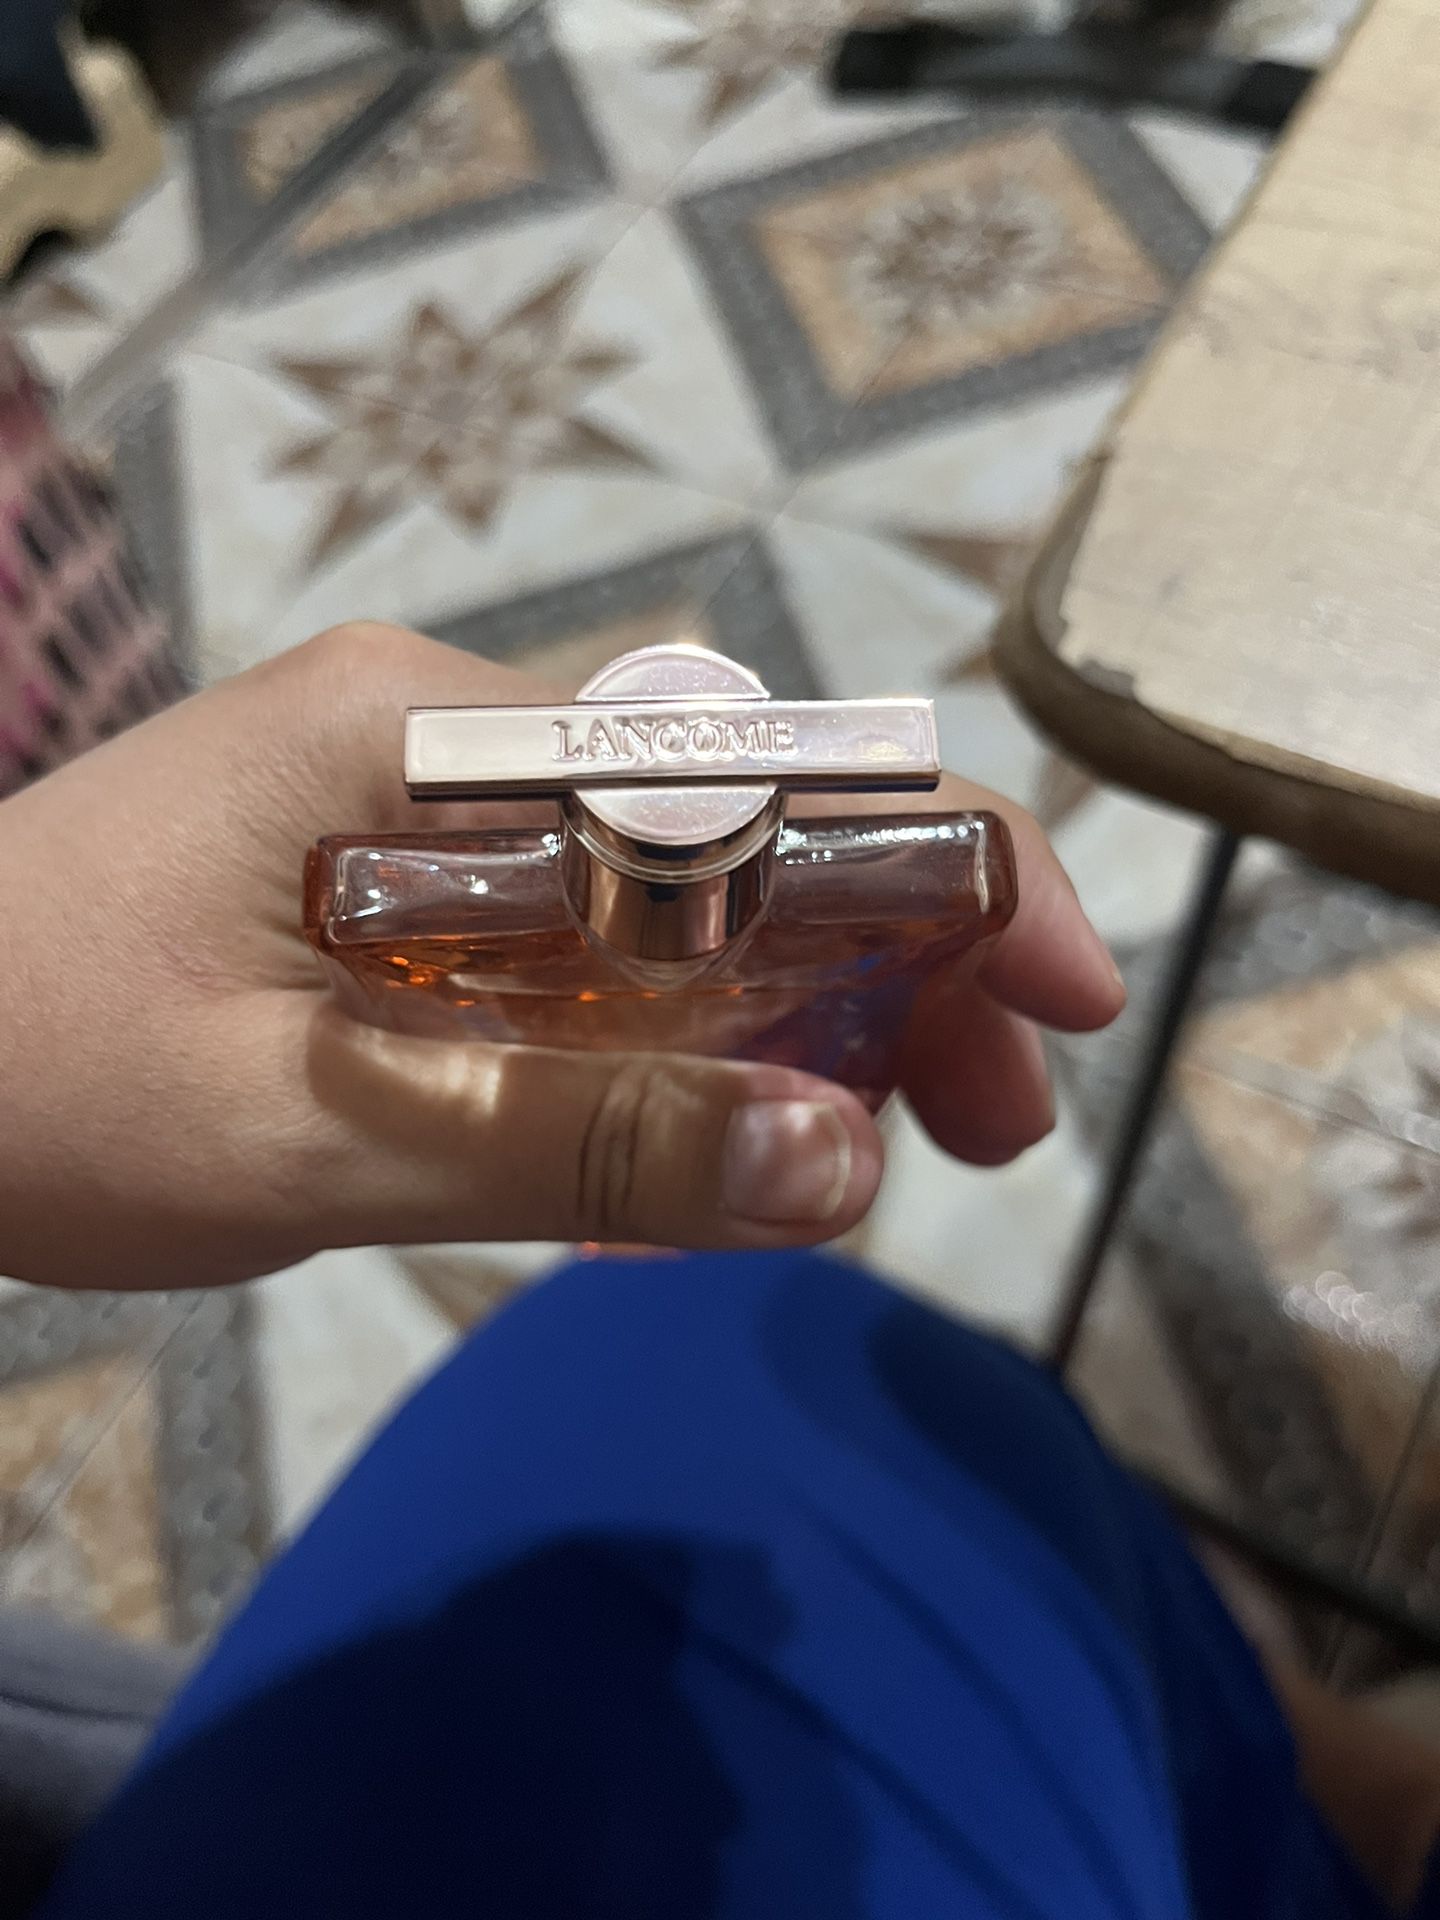 Lancôme Perfume 